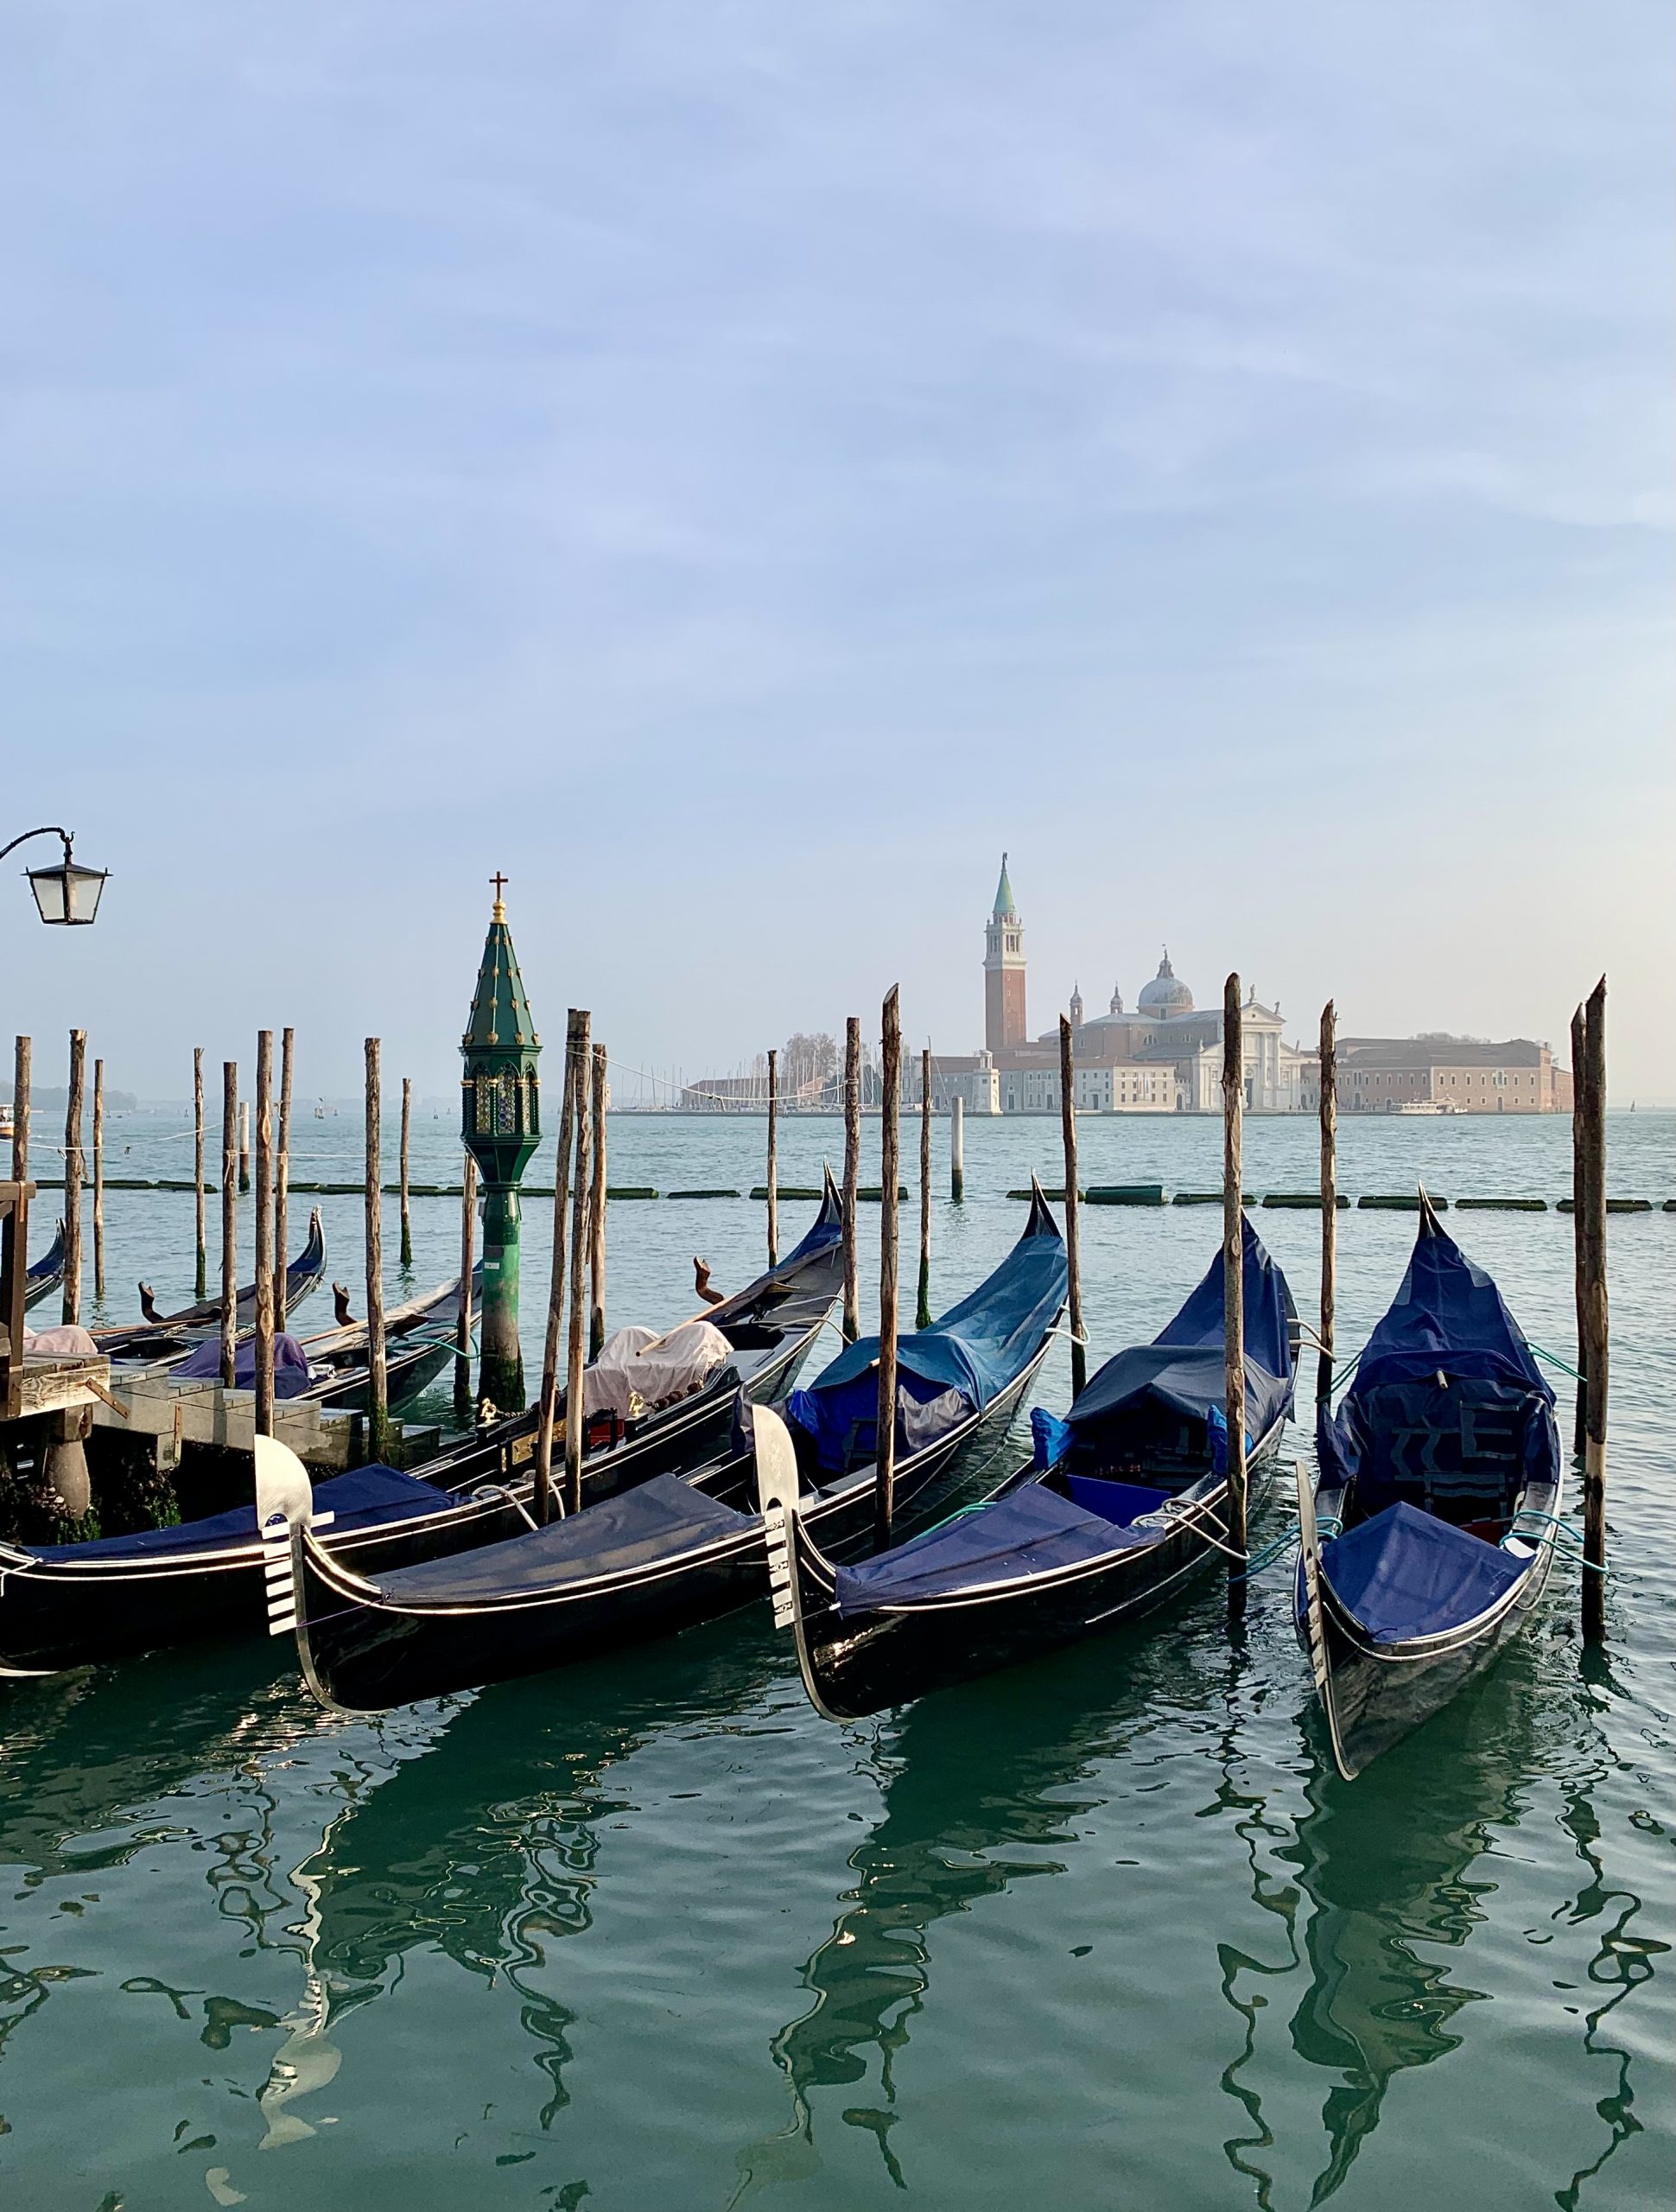 "Venice Gondola Views" by Lauren Pawlowski